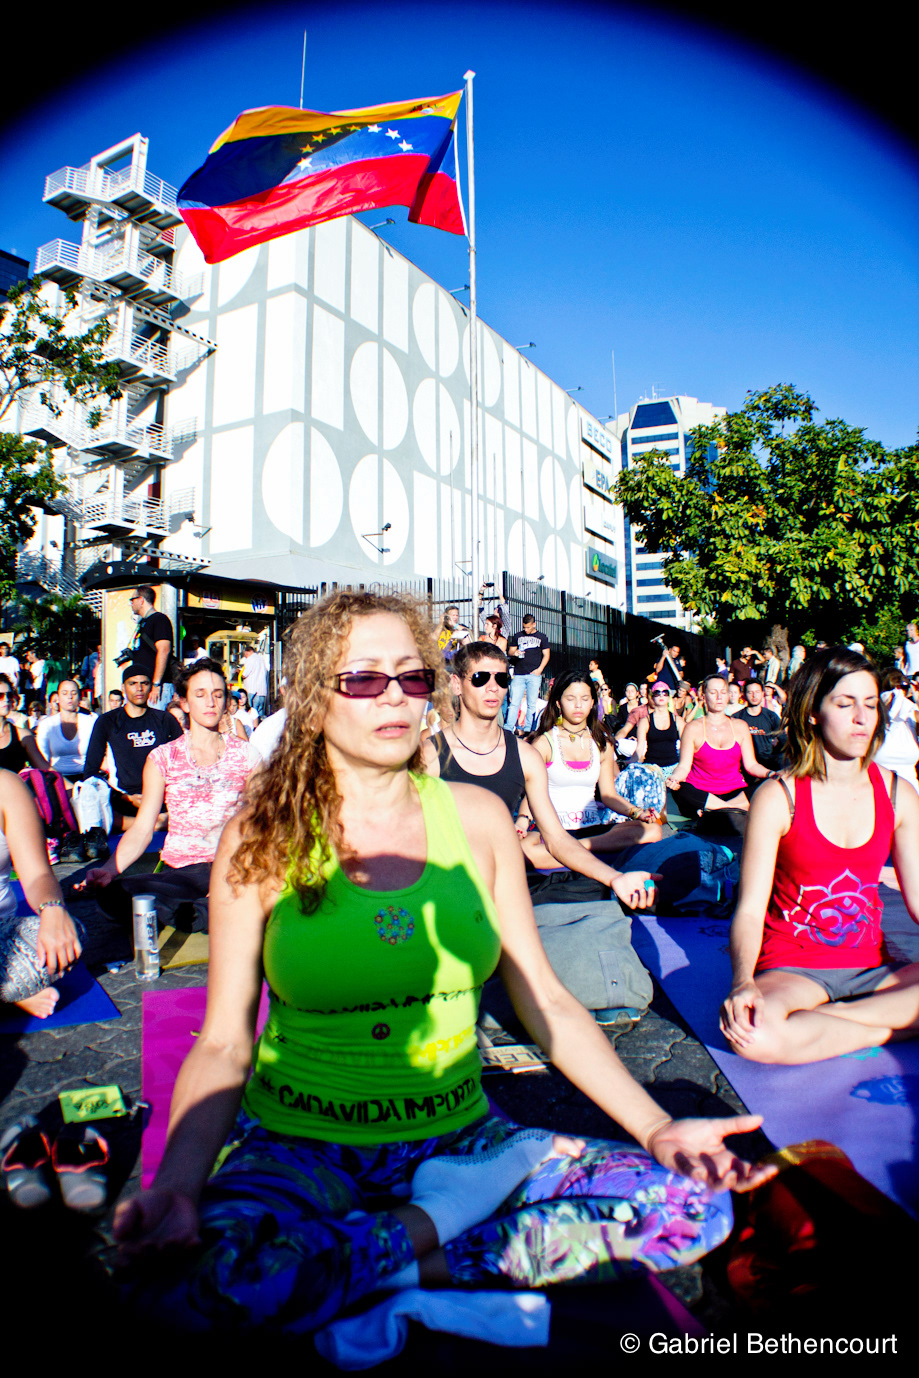 caracas venezuela Yoga meditacion meditate paz peace amor Love protesta protest vibraciones vibrations smile risas